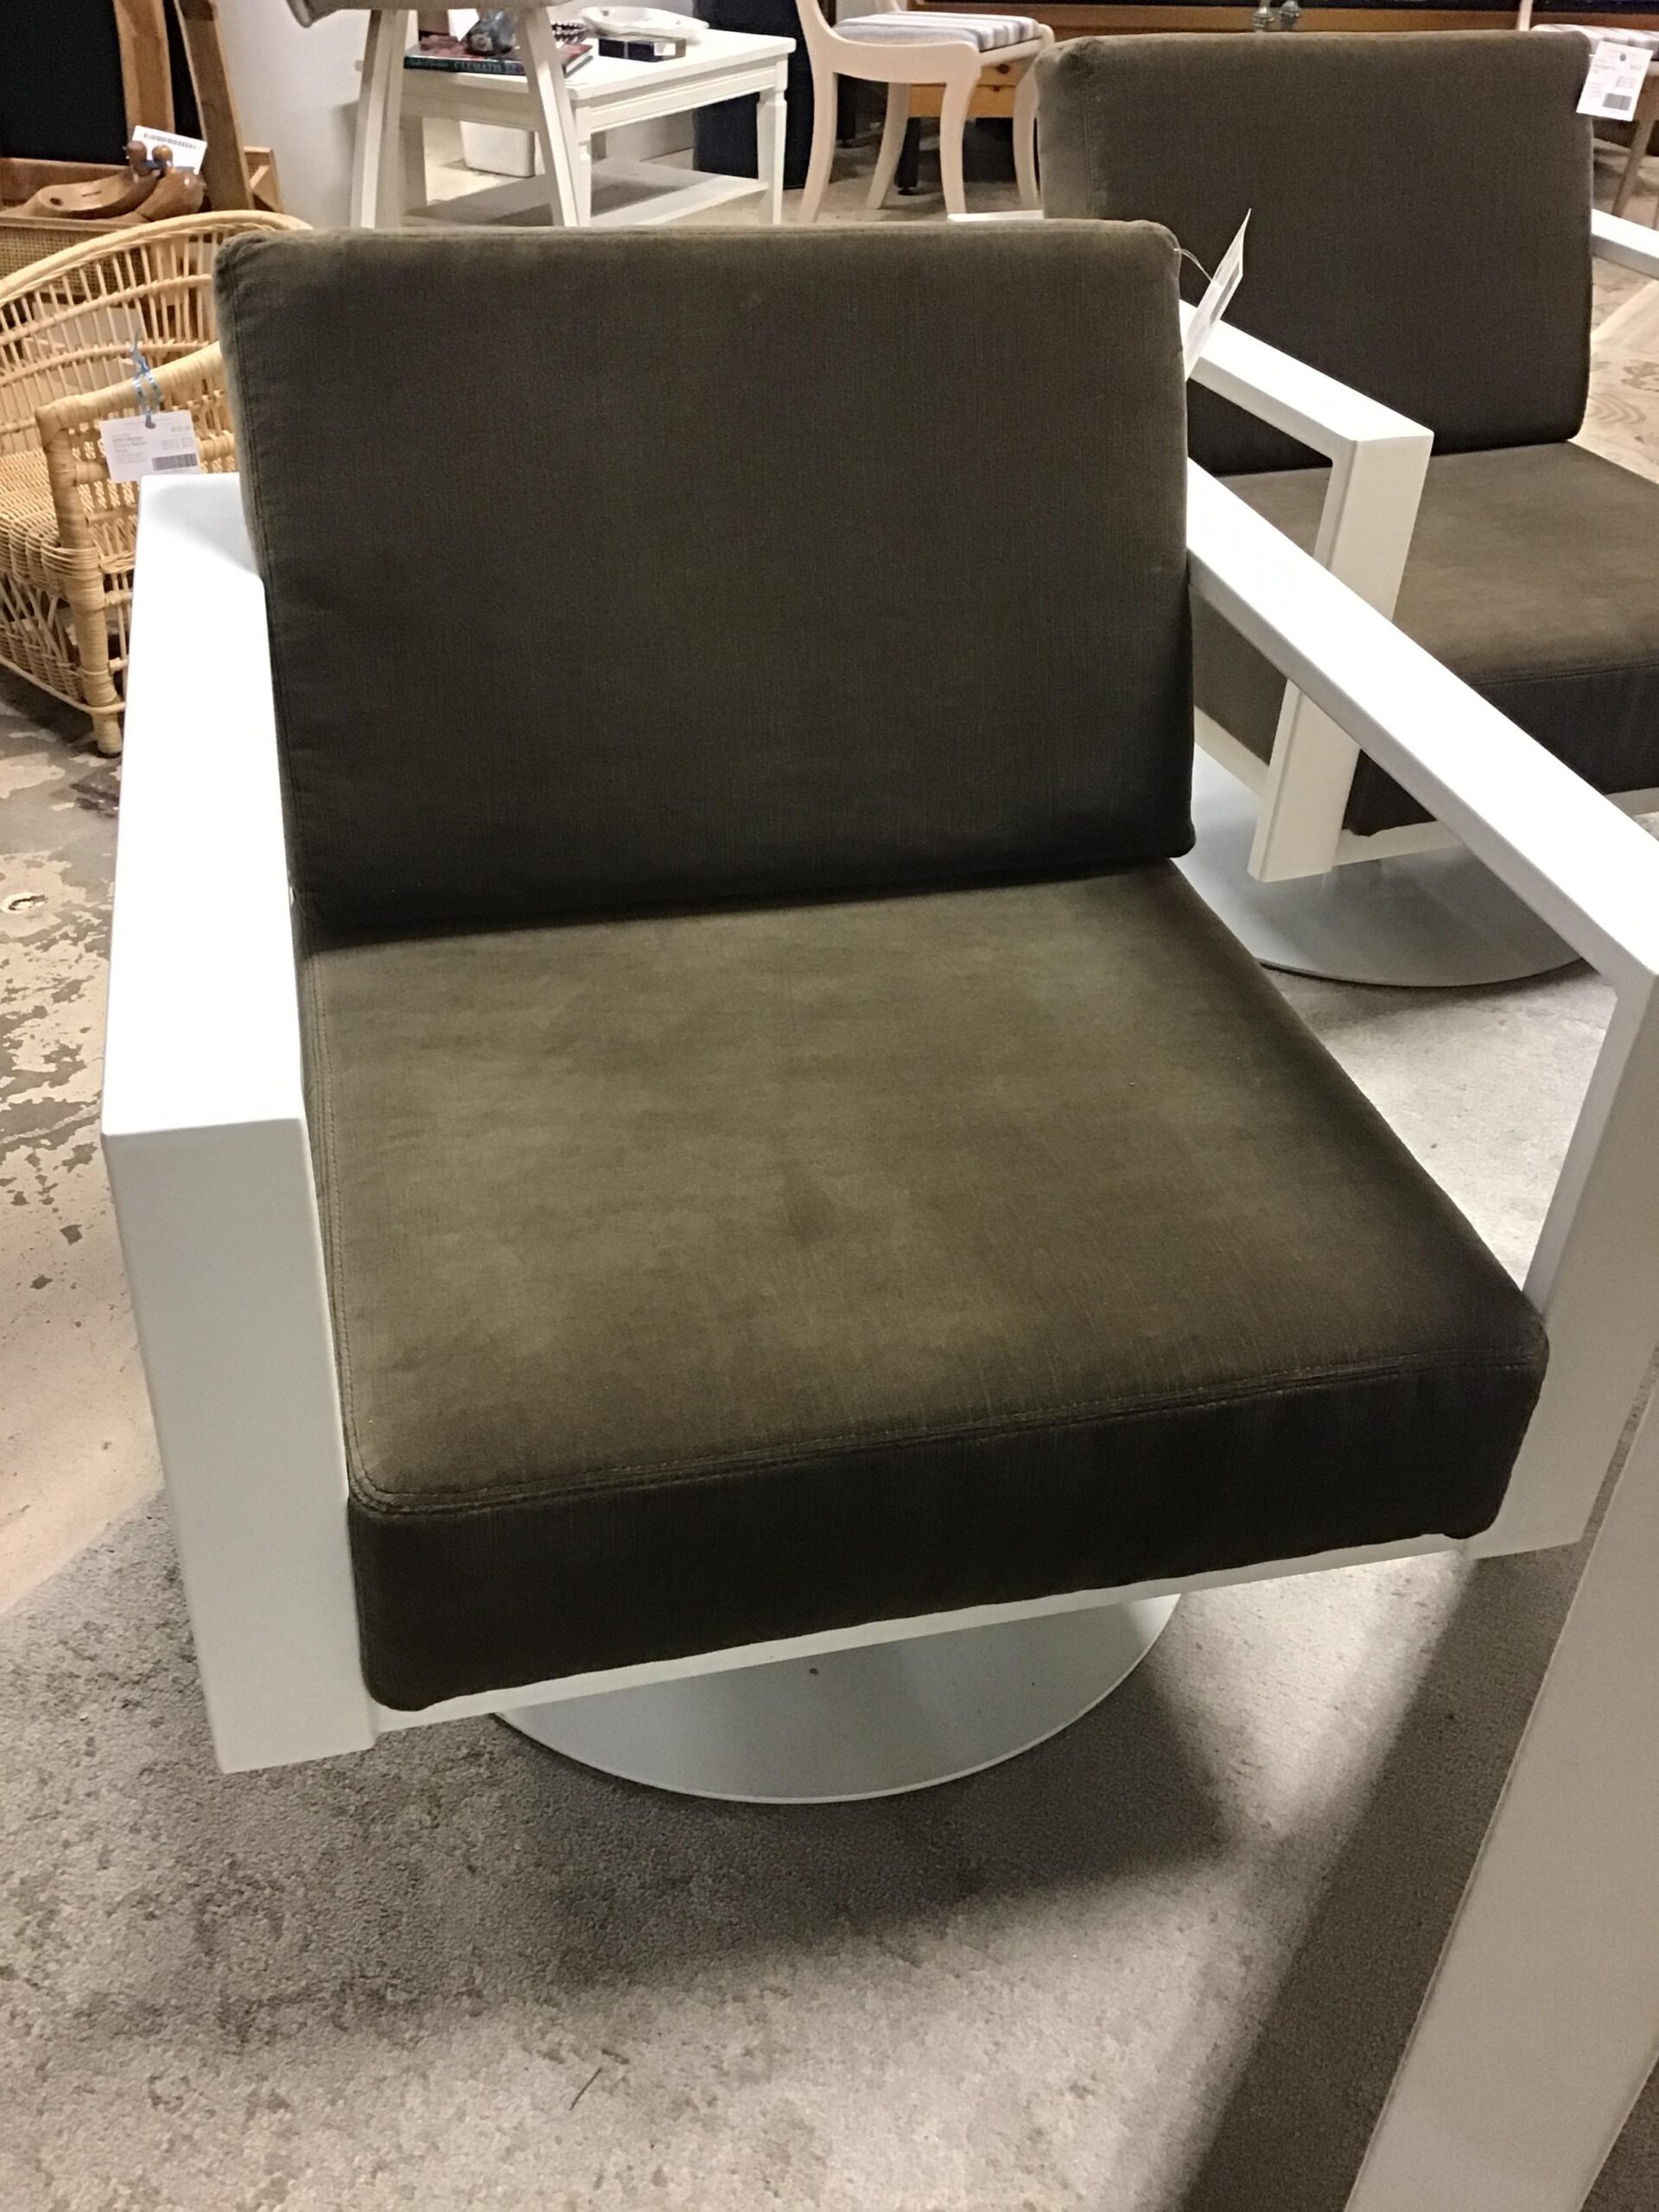 Metal Swivel Arm Chair – NEW PRICE $307.39 ! SAY GOOD BUY !!